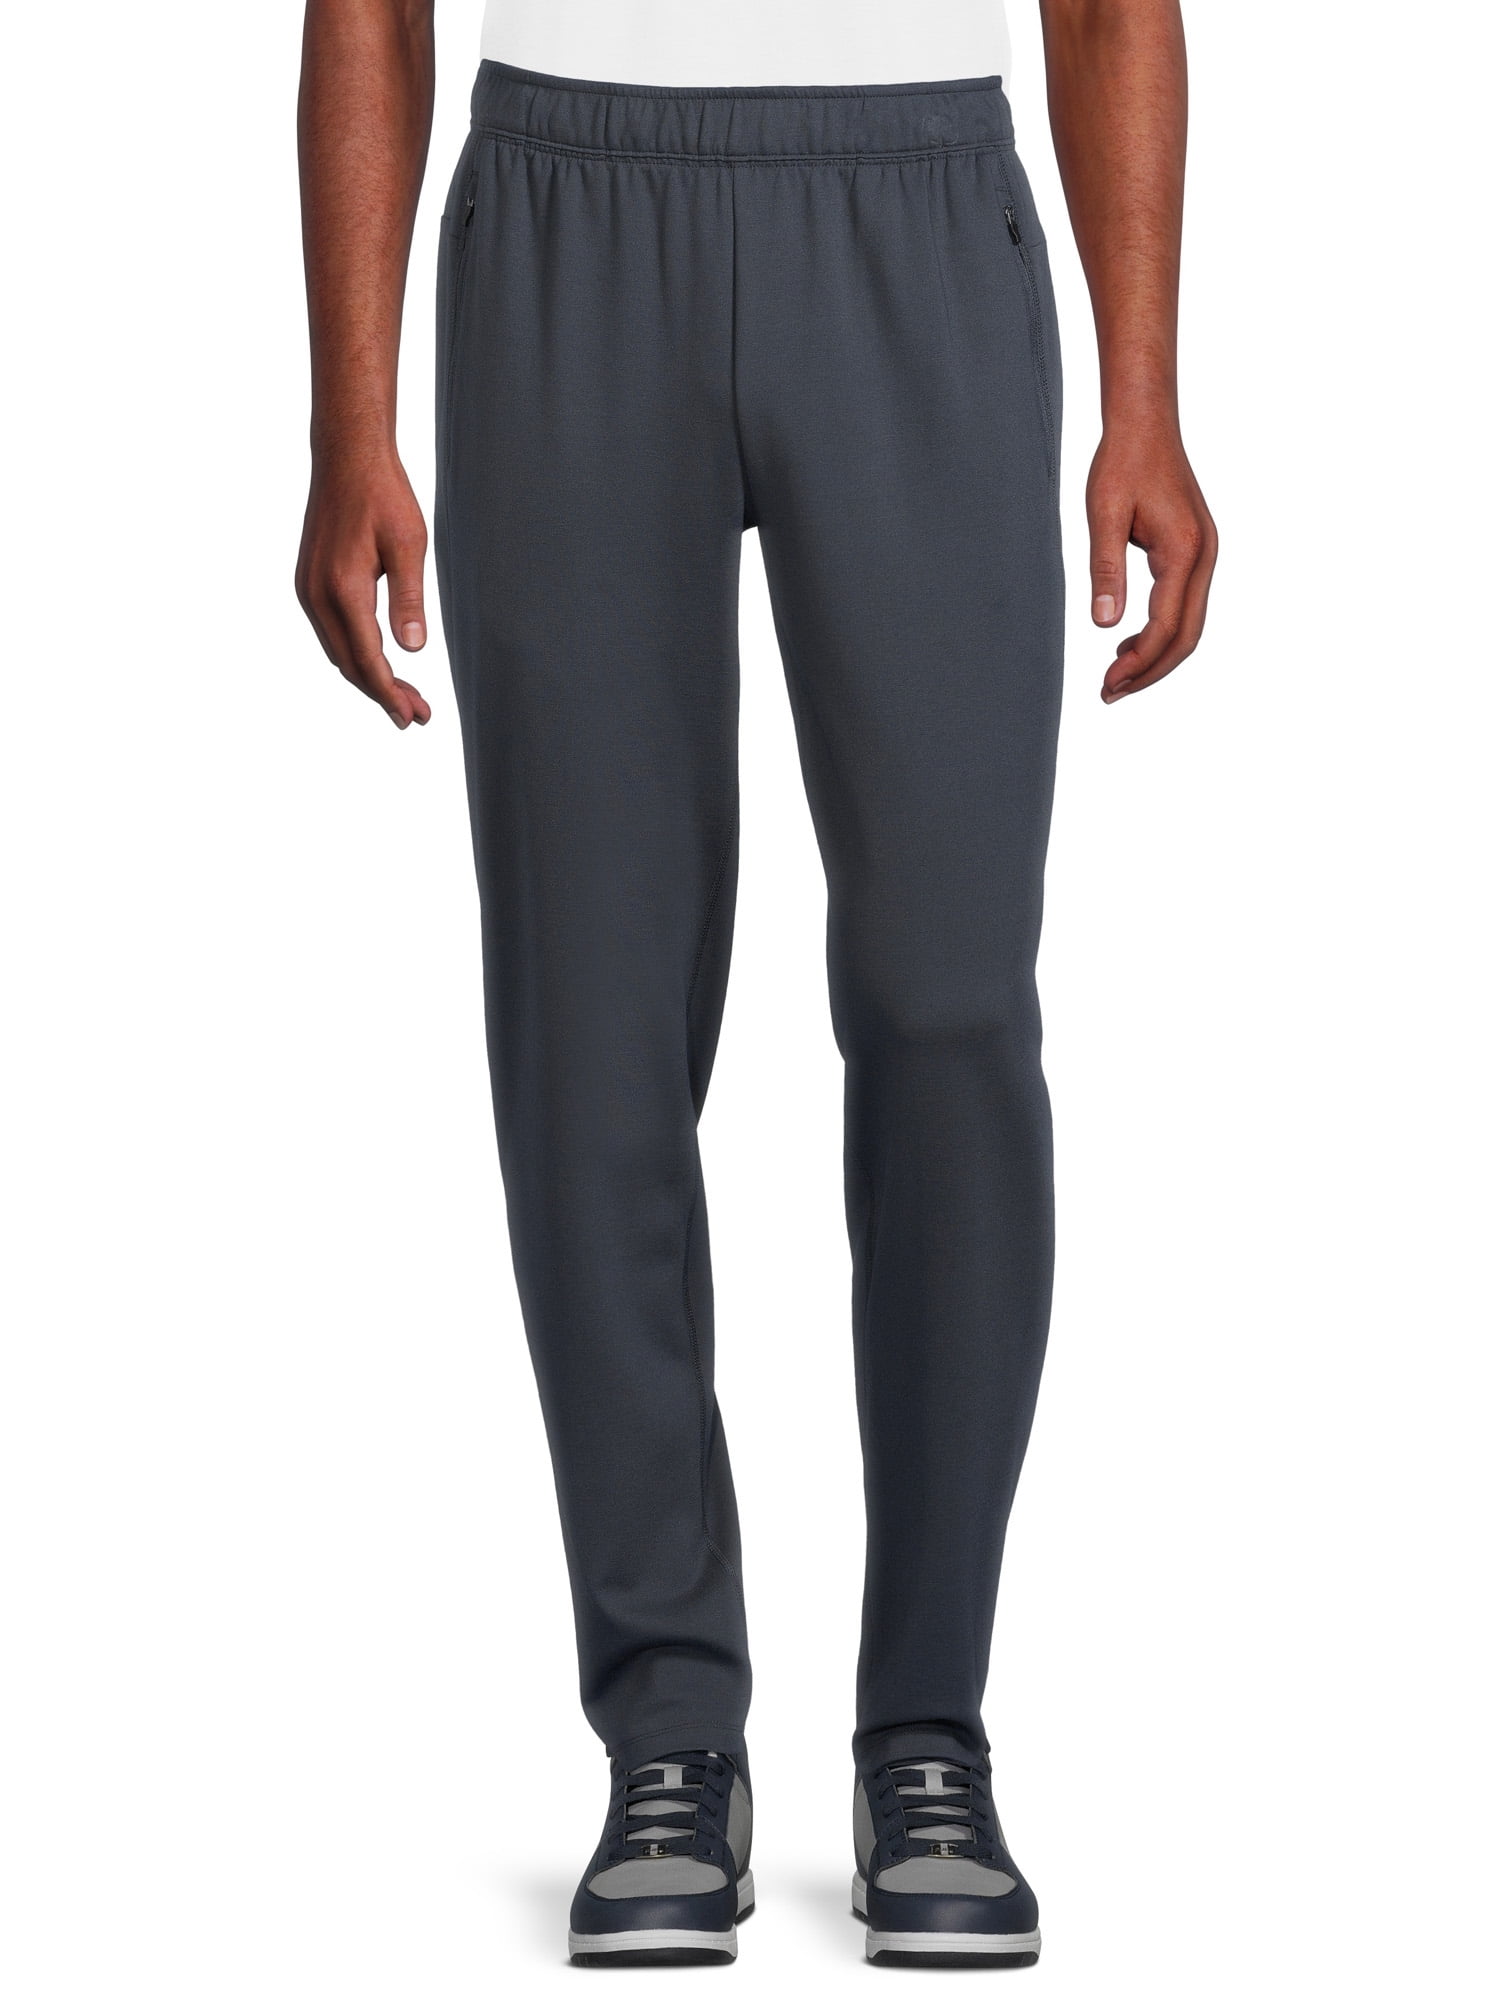 Nike USA (USMNT) Mens Knit Soccer Pants | East Coast Soccer Shop